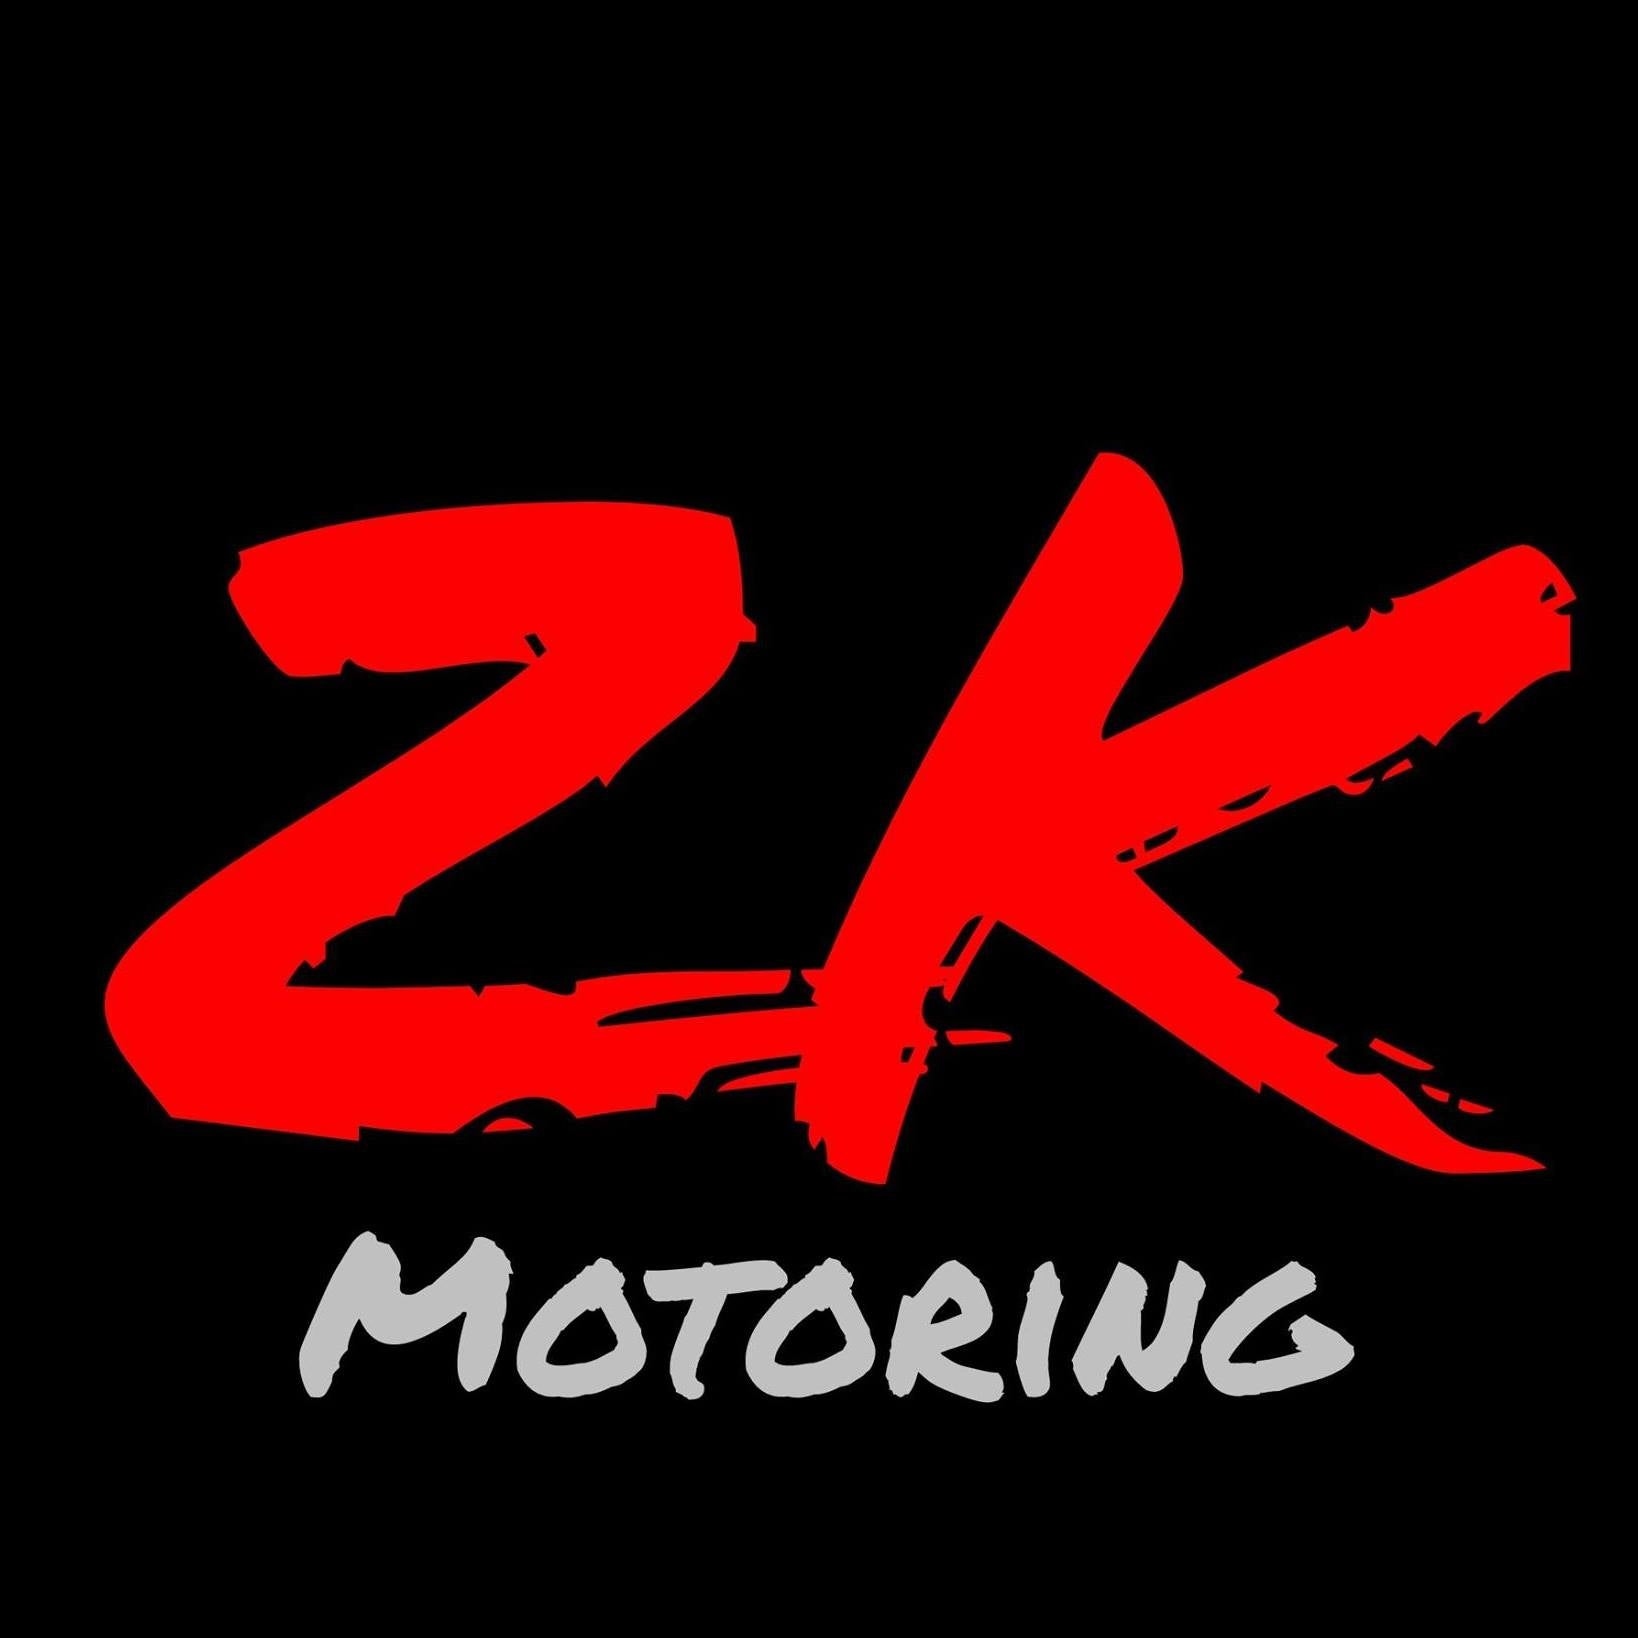 ZK Motoring